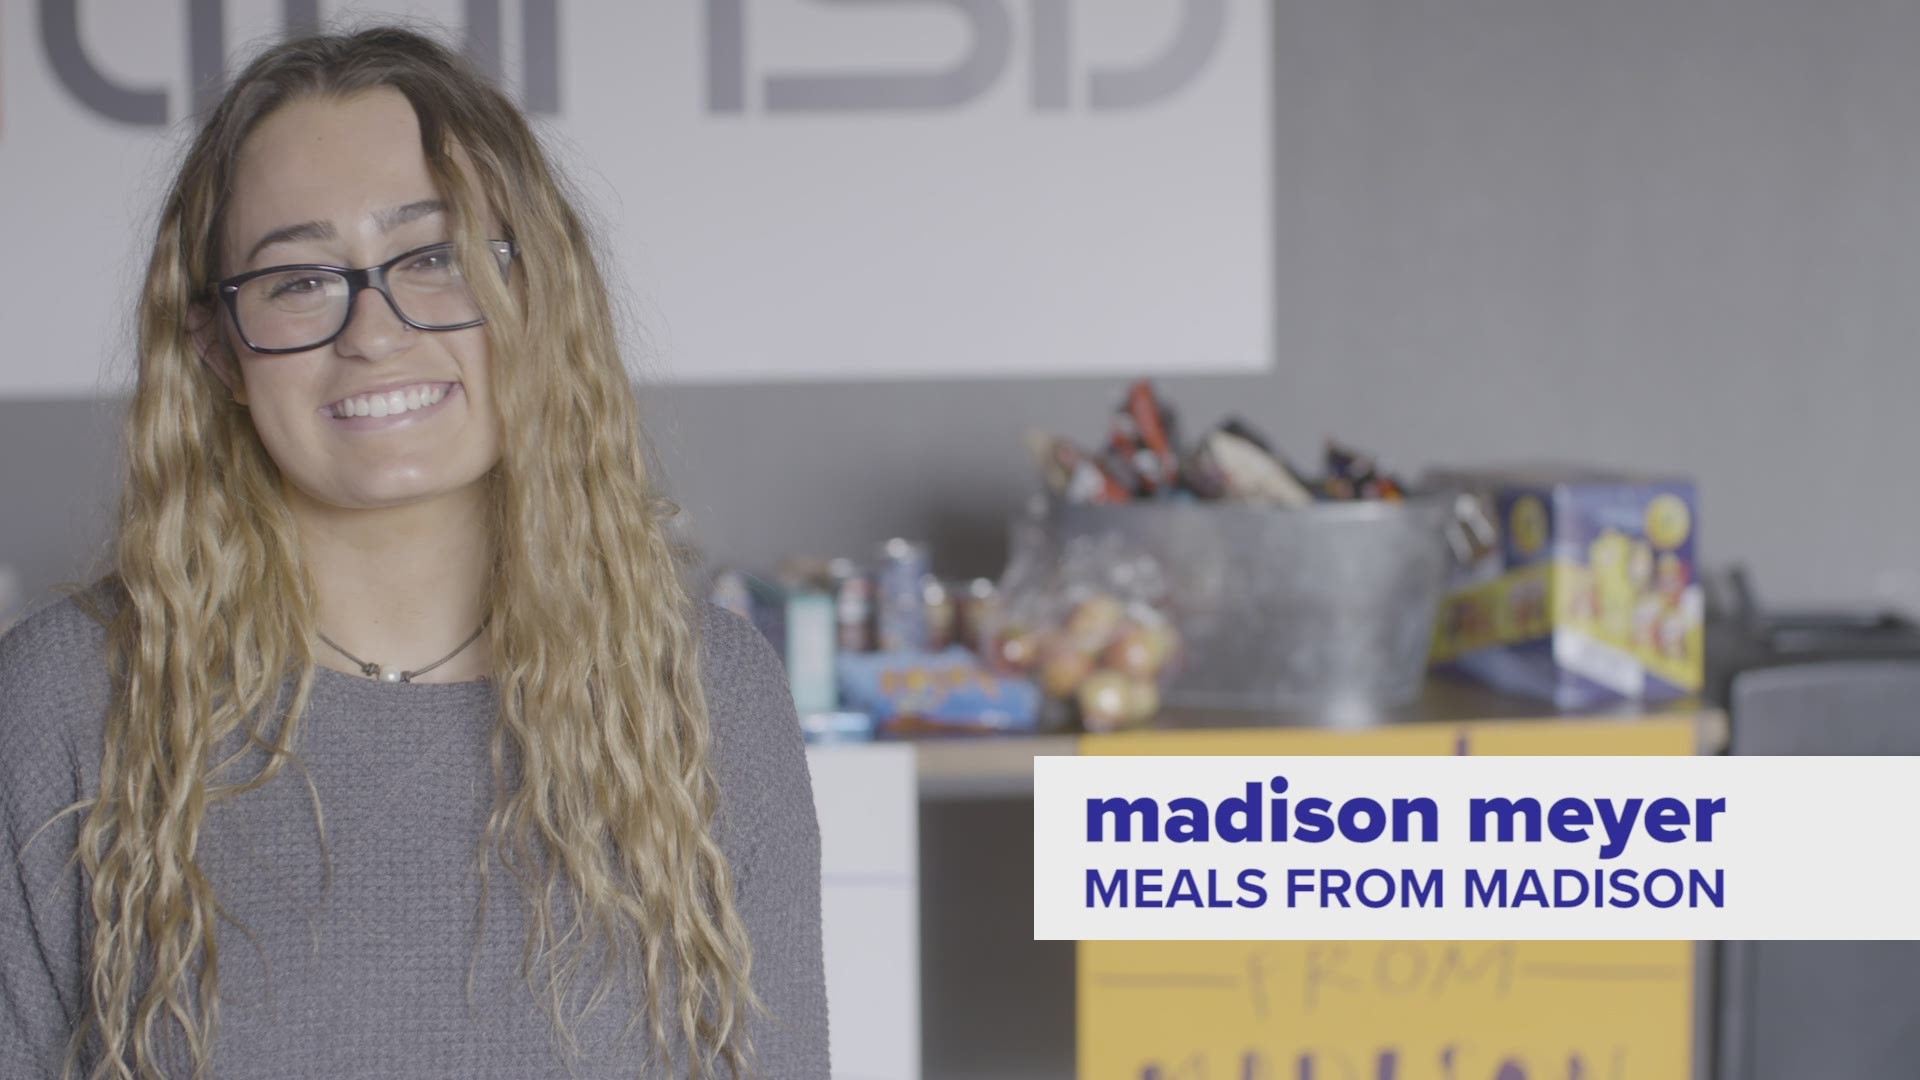 Meet Five Who Care winner Madison Meyer.